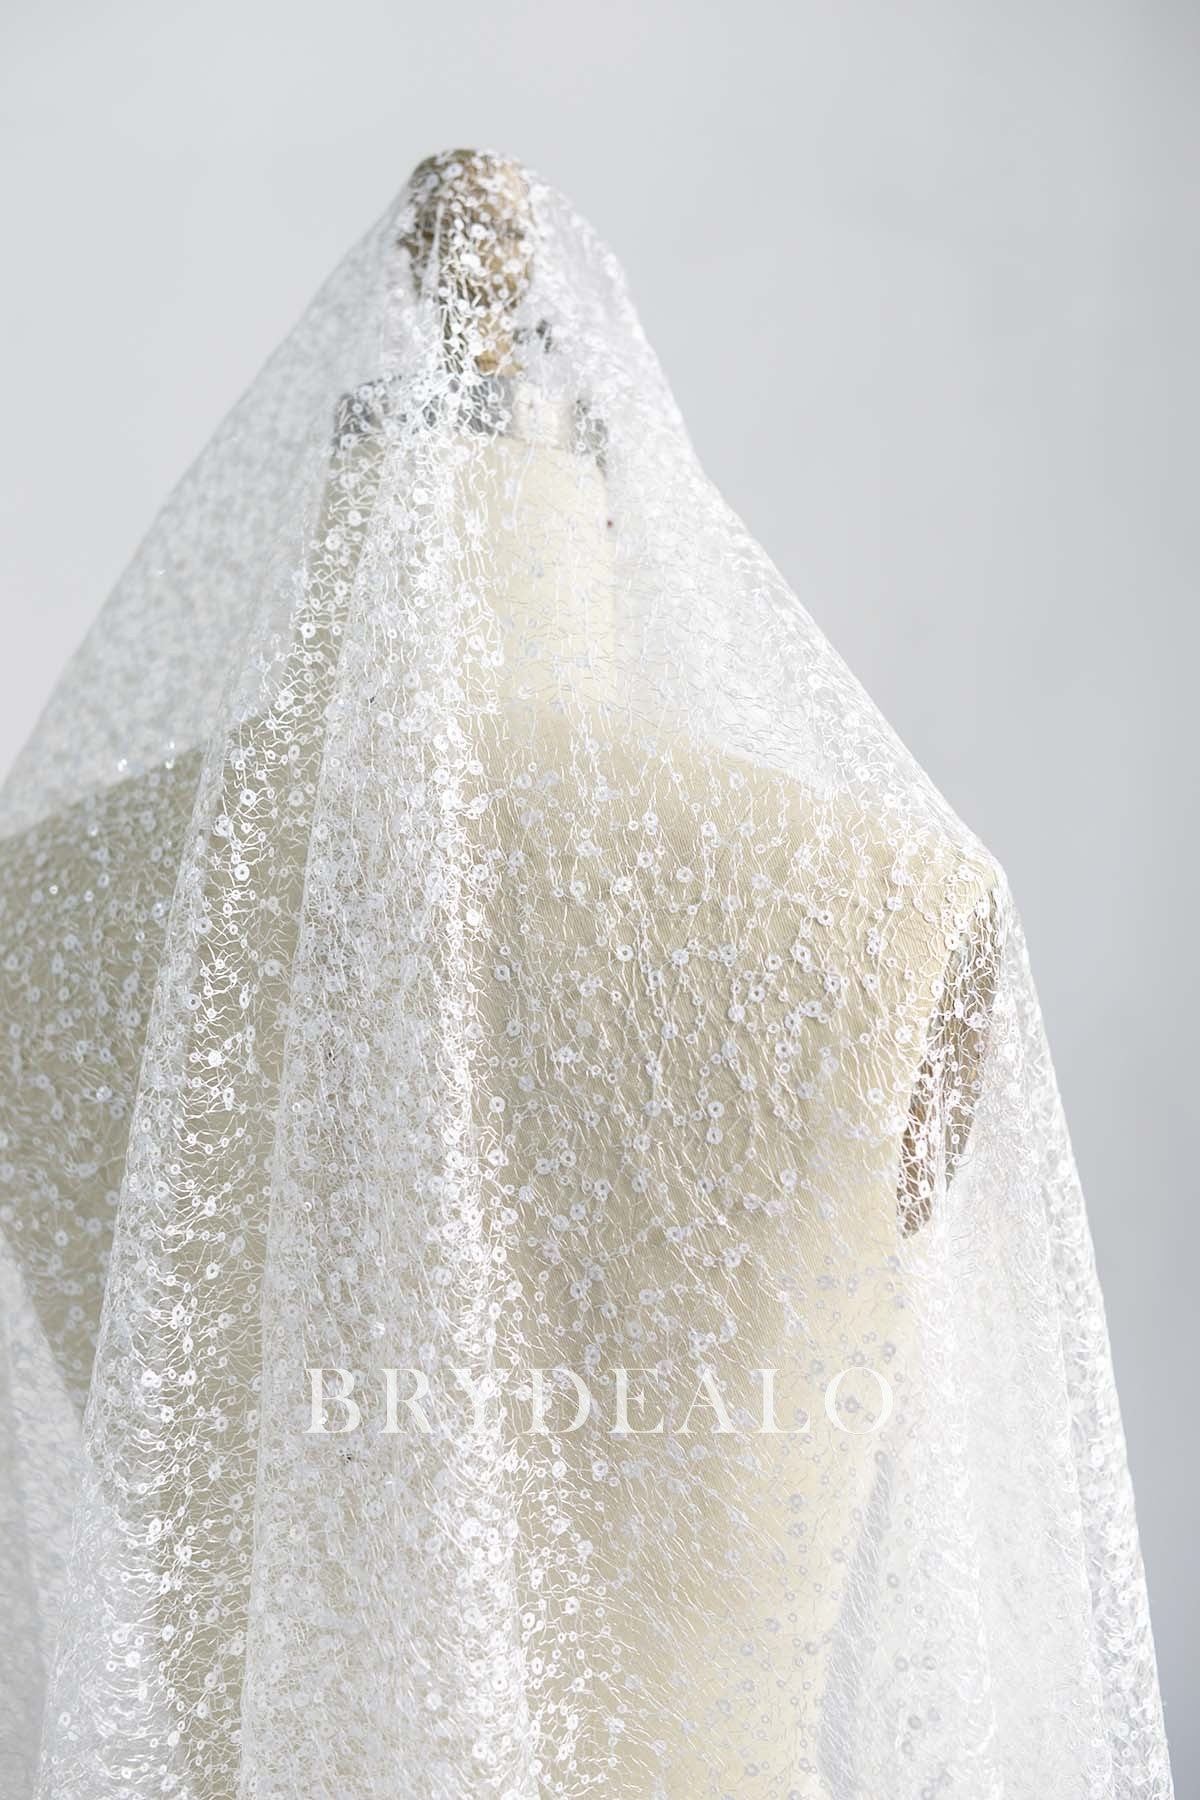 Designer Creamy White Sequin Clutter Net Fabric